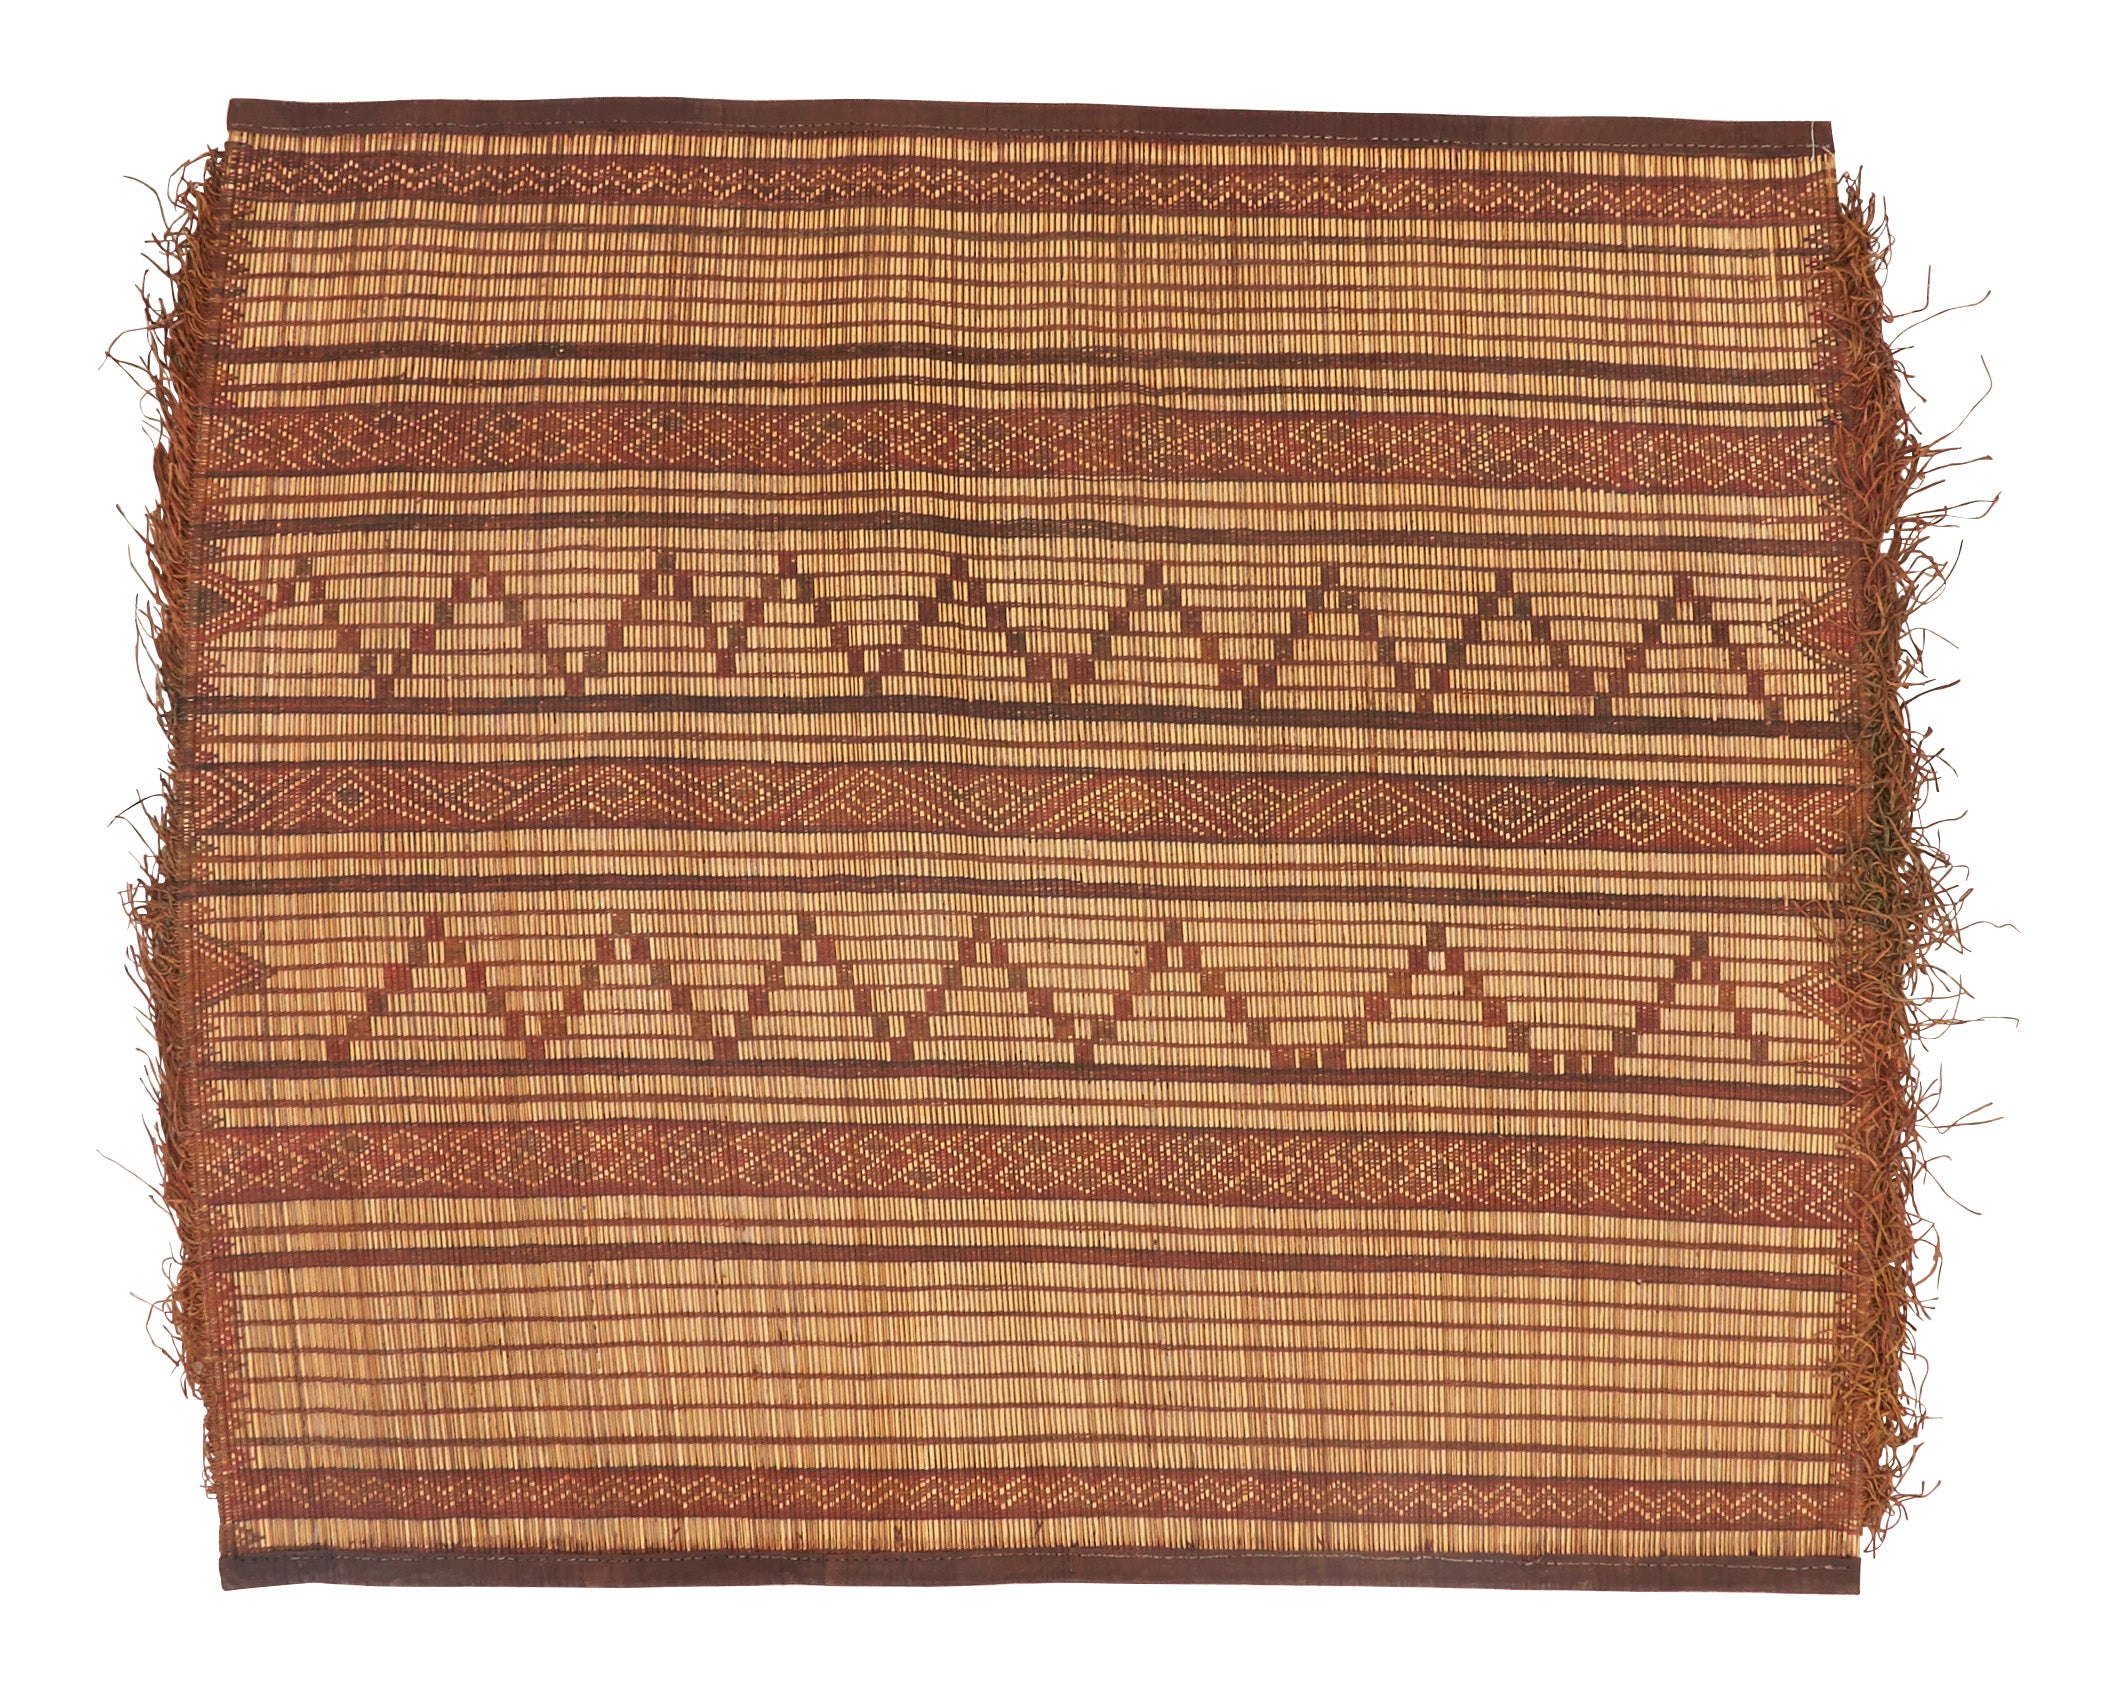 4x3 custom rug – Tuareg mat